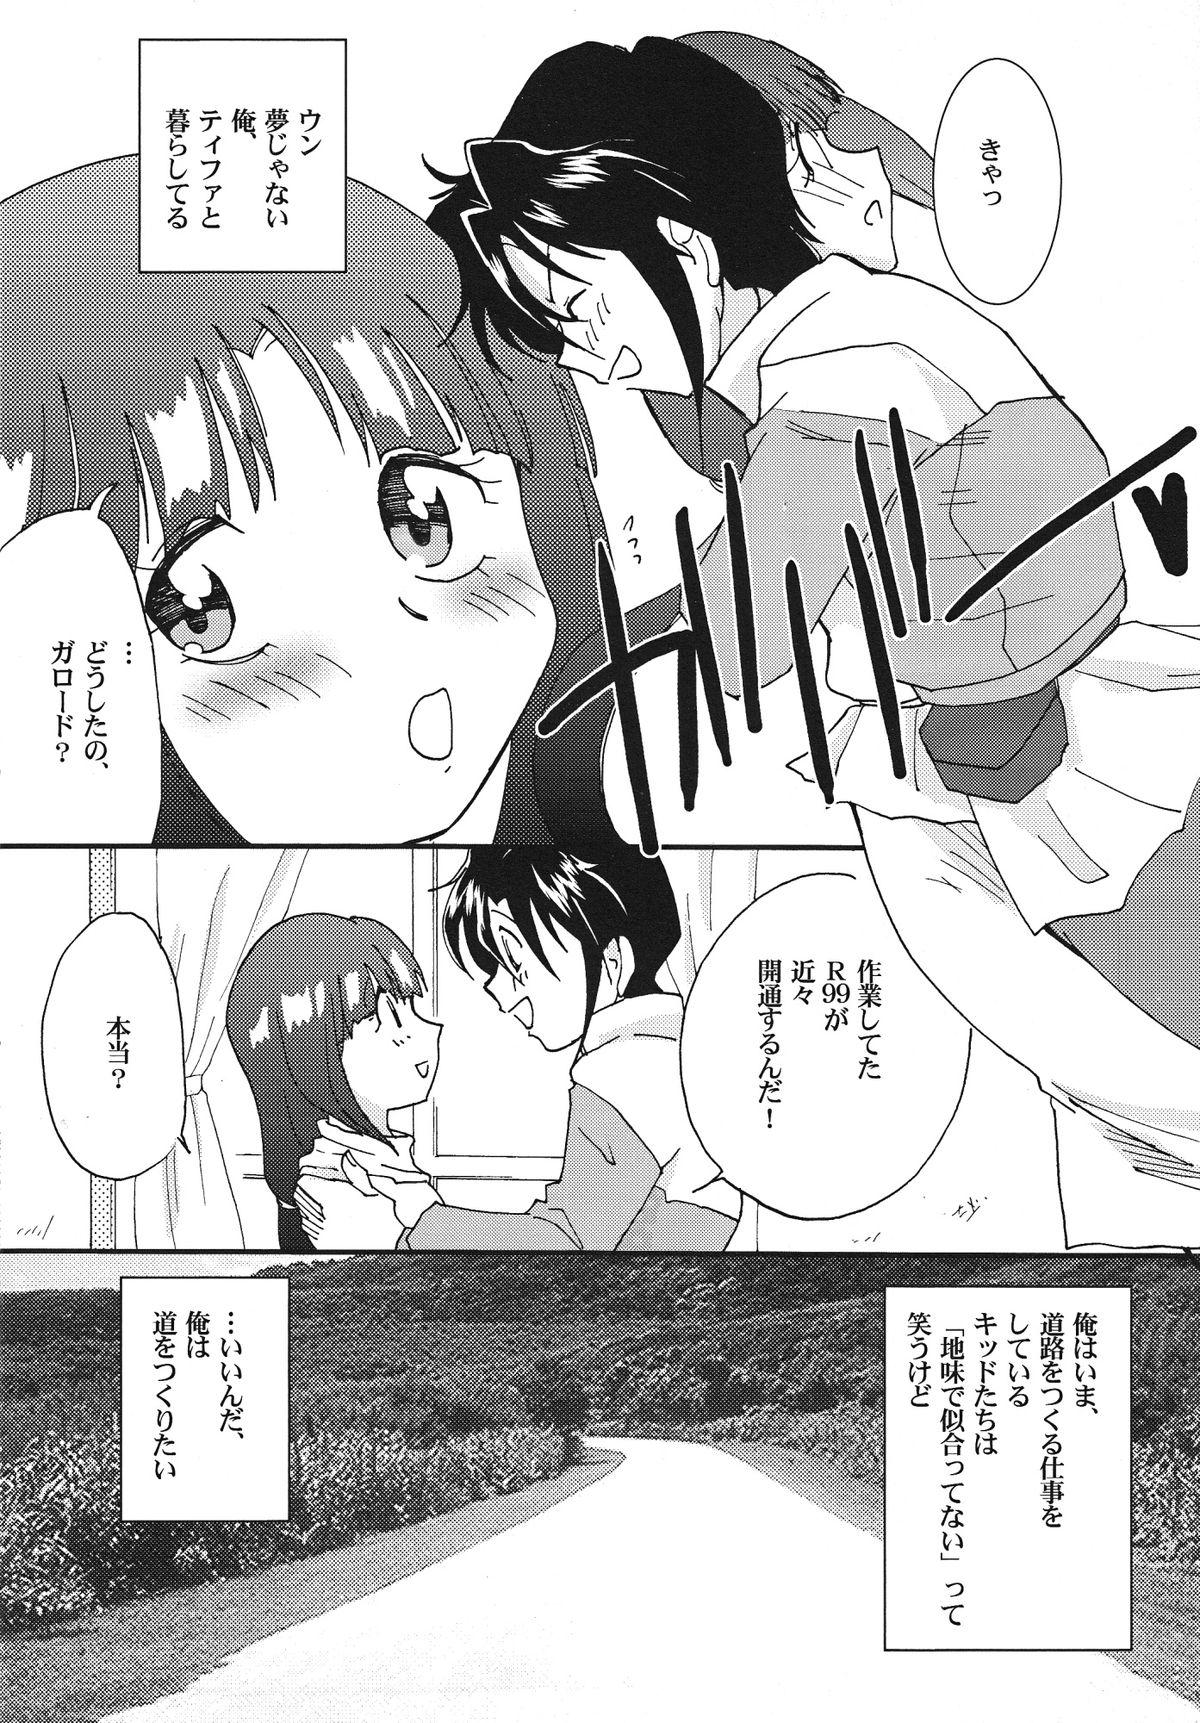 Perverted DREAMS - Gundam x Messy - Page 7